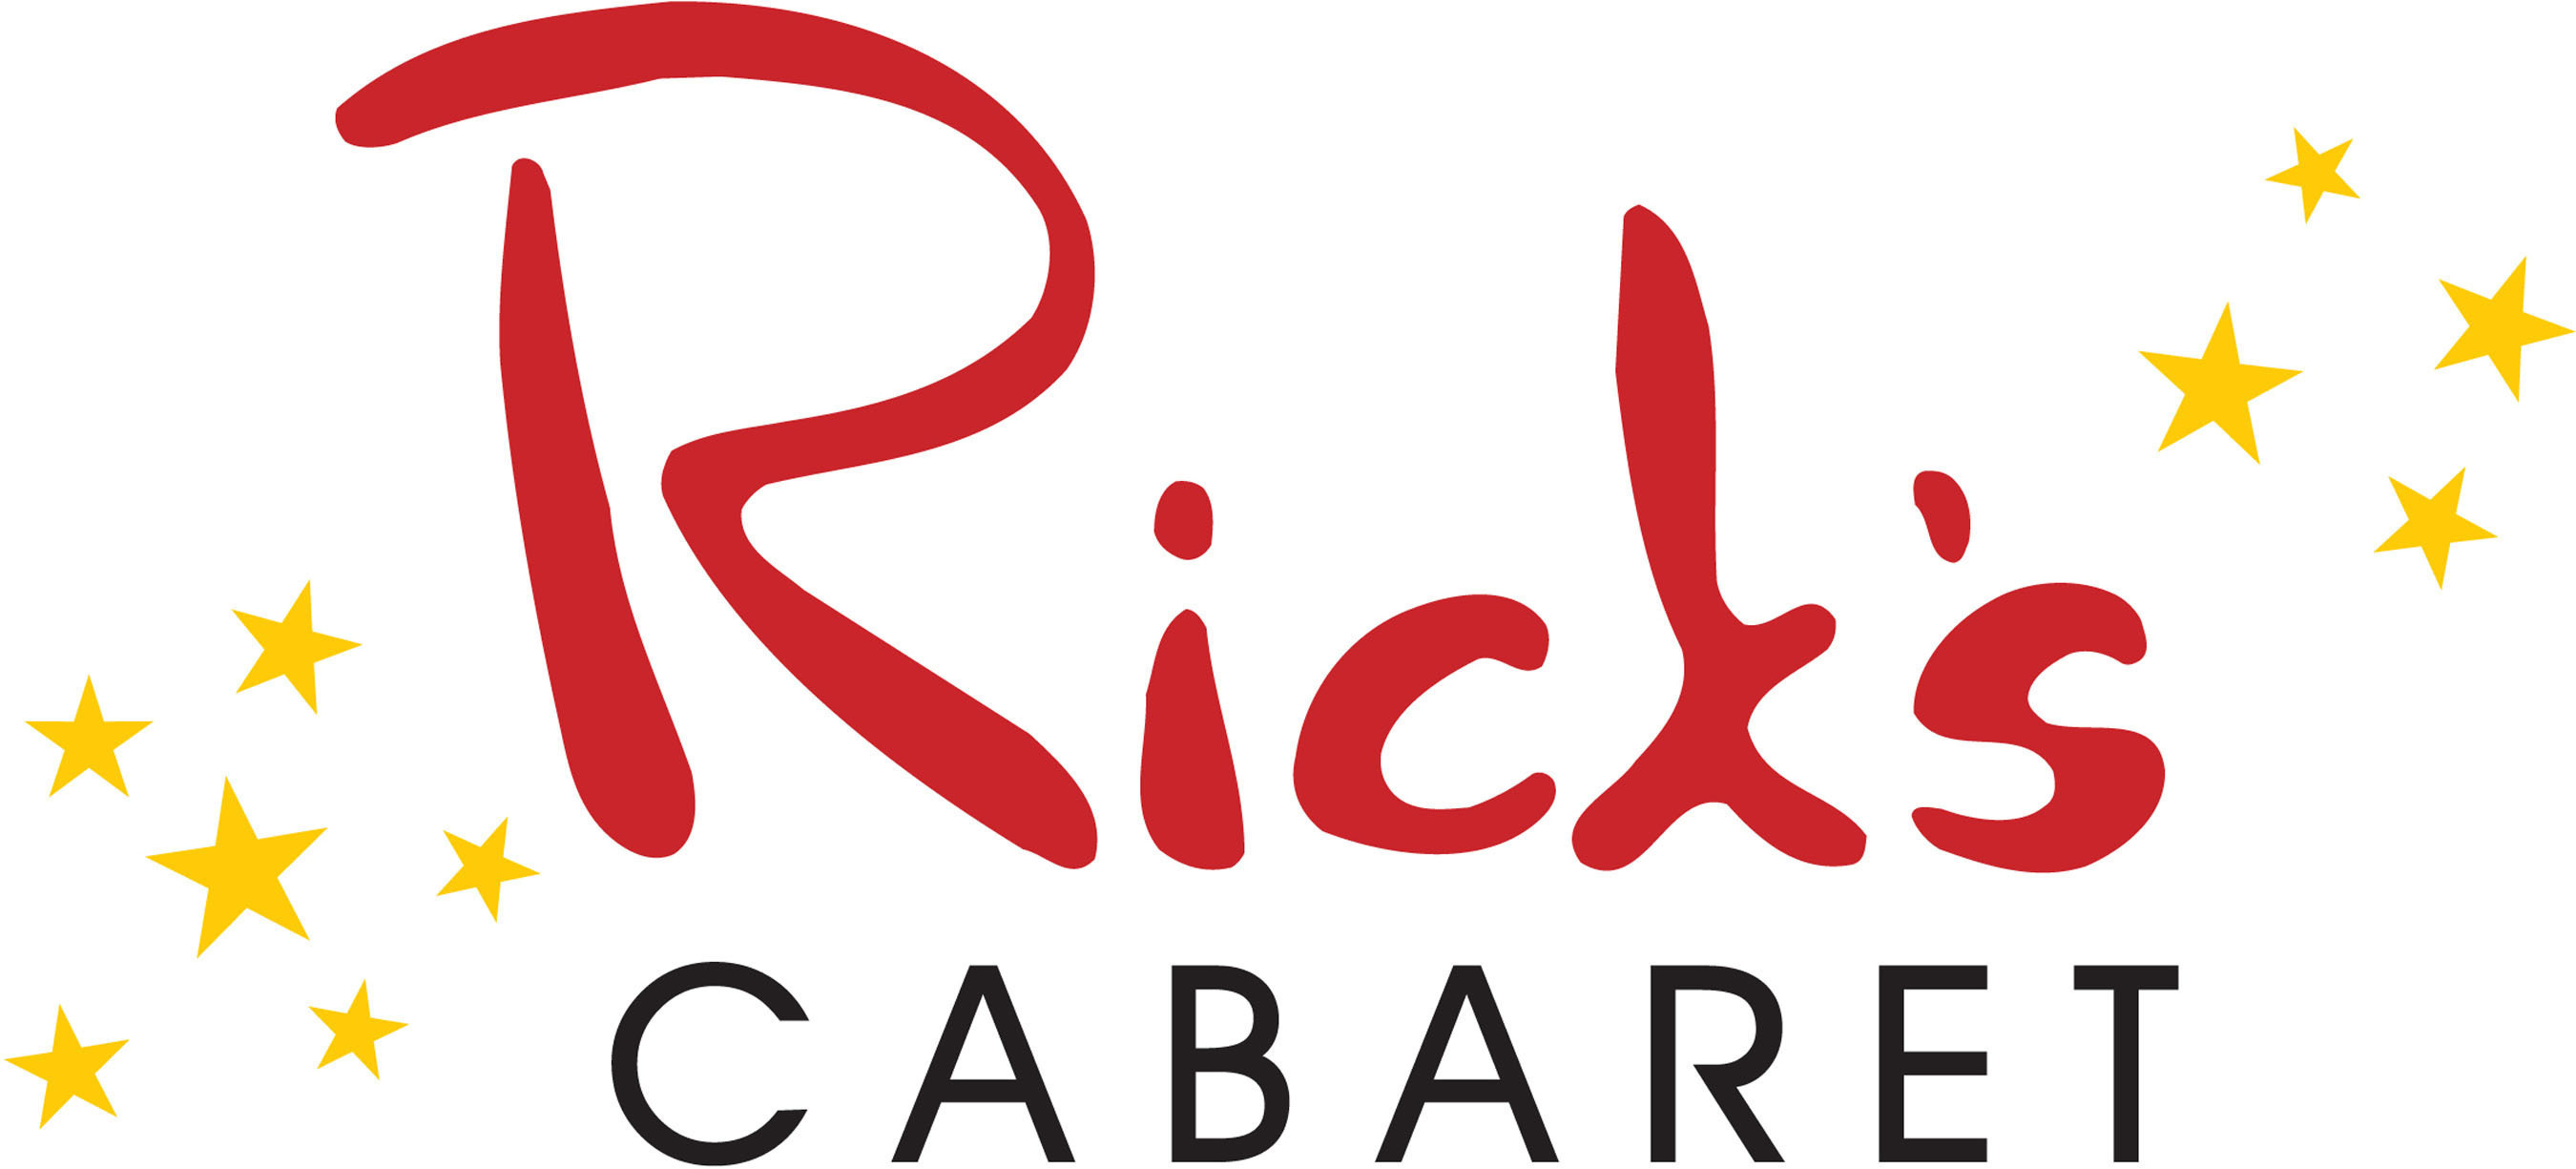 Rick's Cabaret Logo. (PRNewsFoto/RCI Hospitality Holdings Inc.) (PRNewsFoto/RCI Hospitality Holdings Inc.)